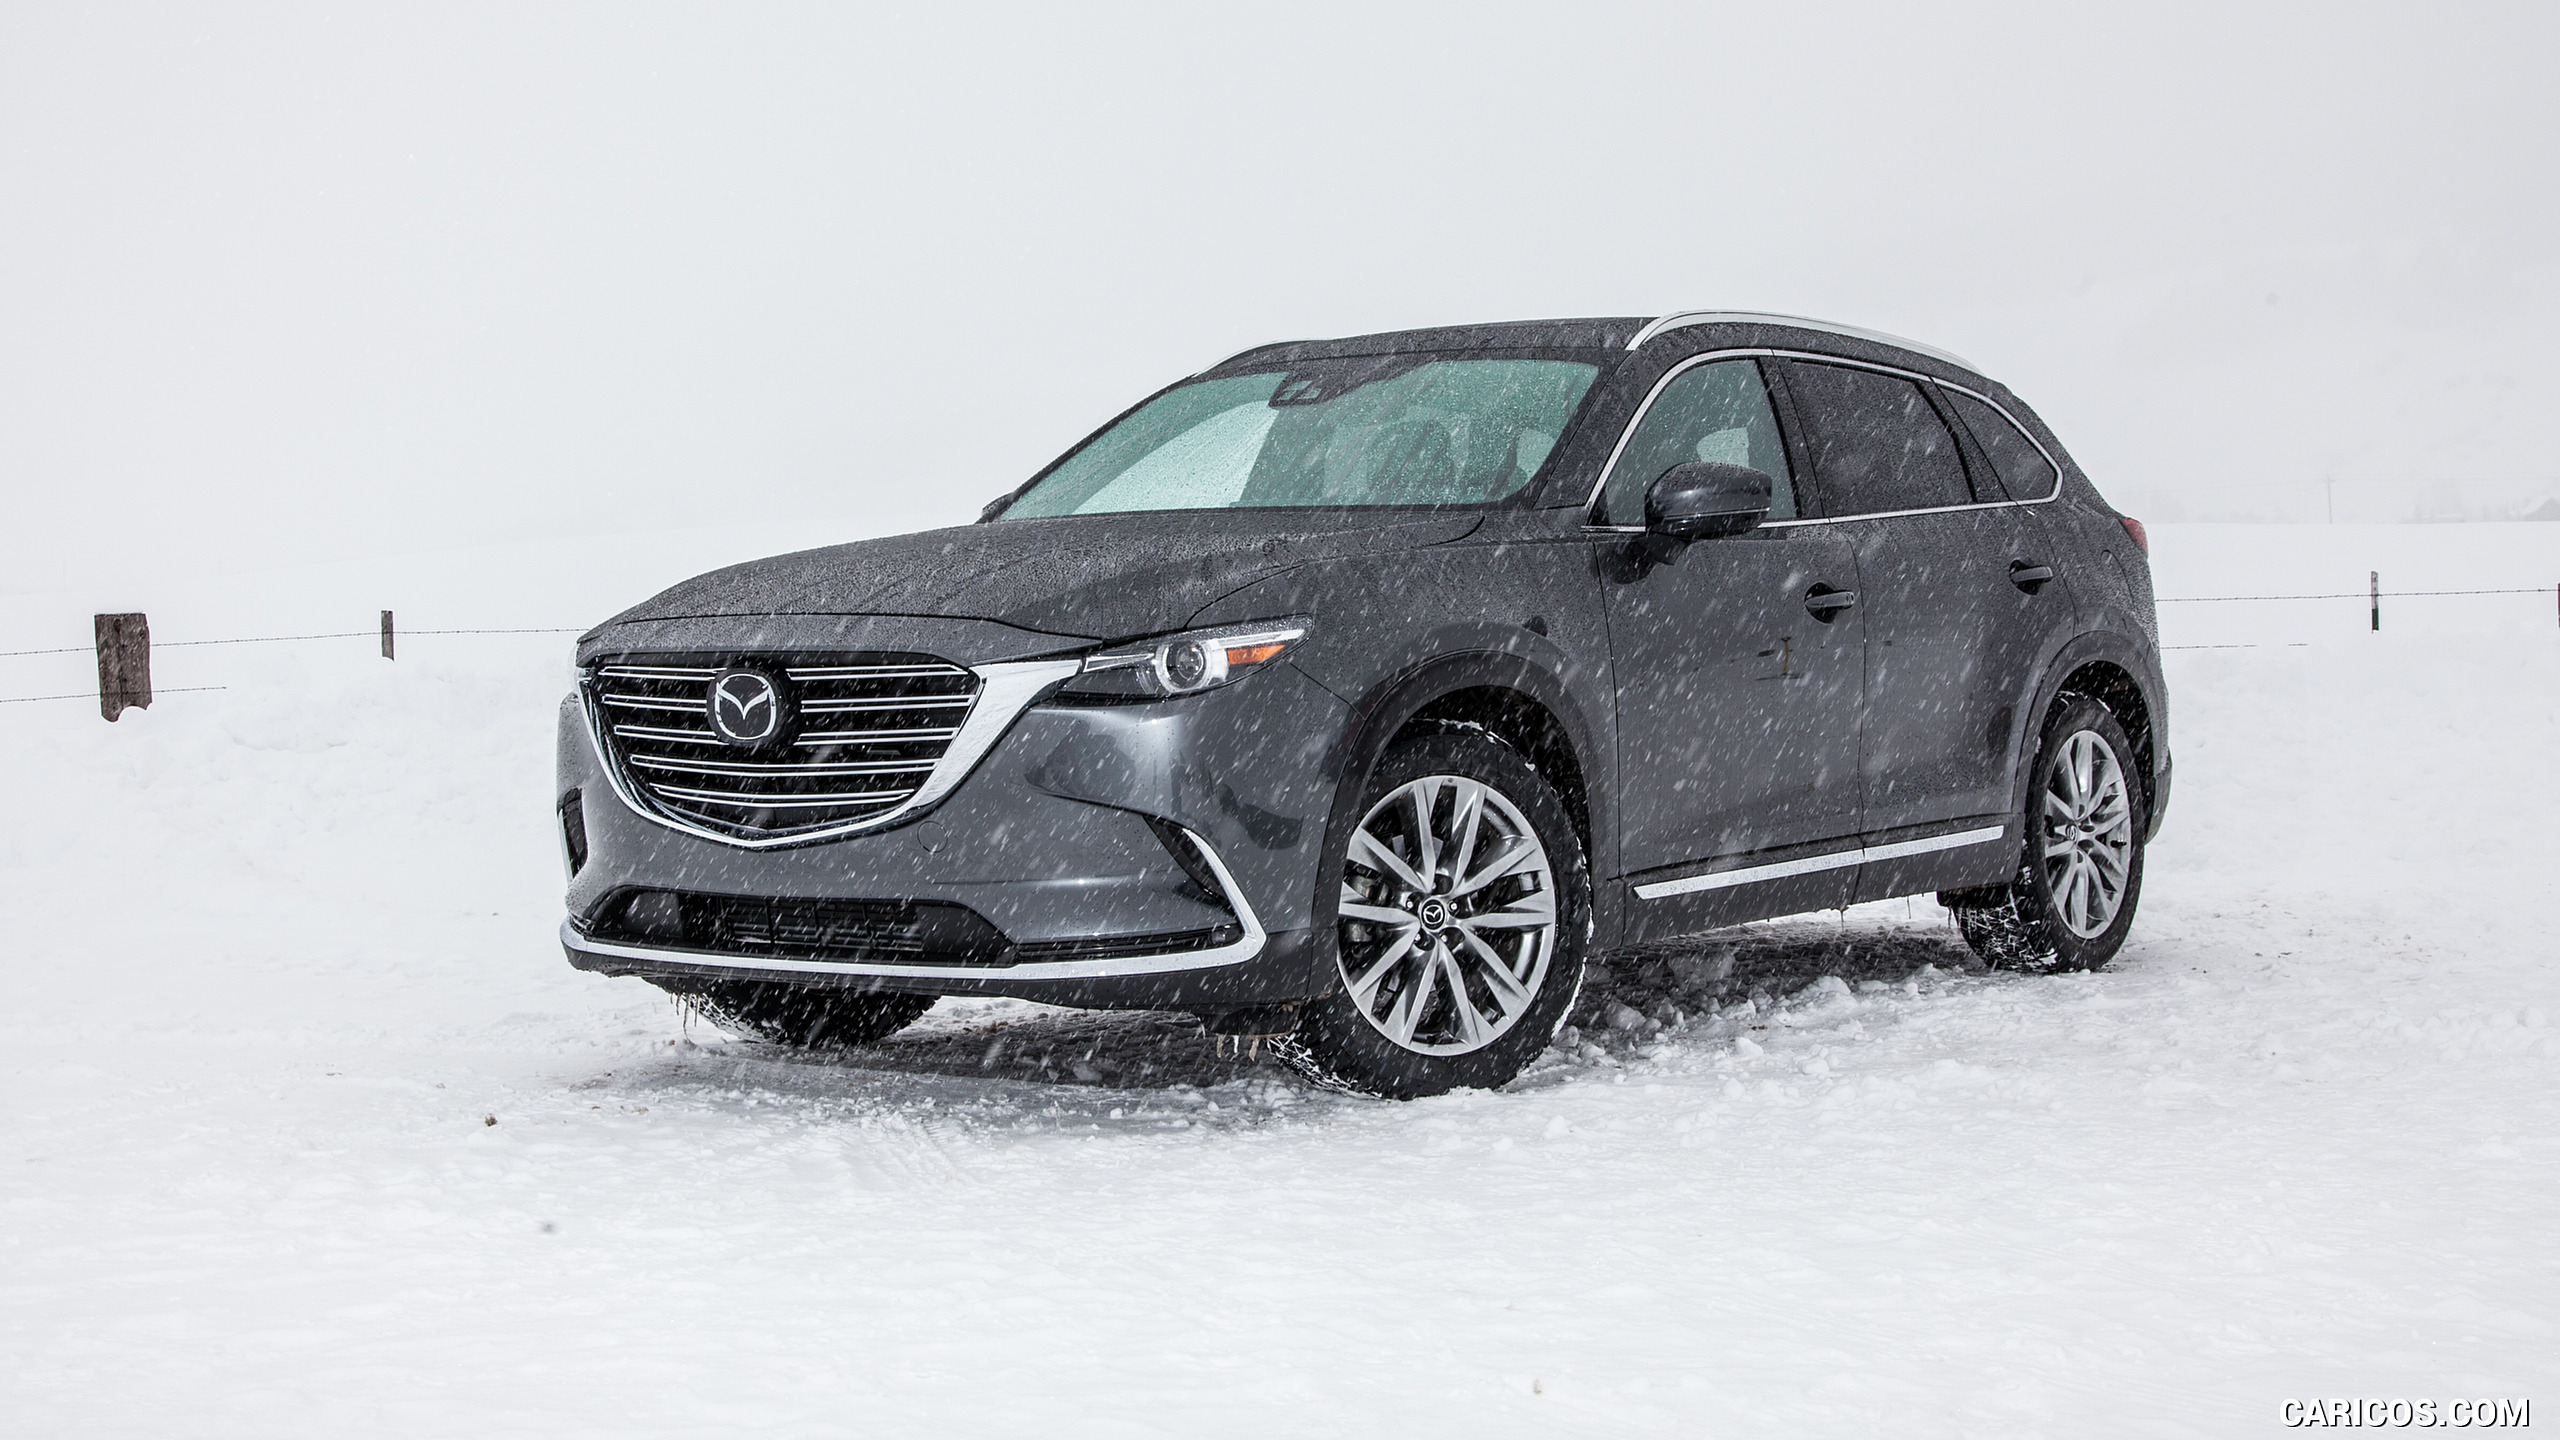 2016 Mazda CX-9 in Snow - Front Three-Quarter, #67 of 69